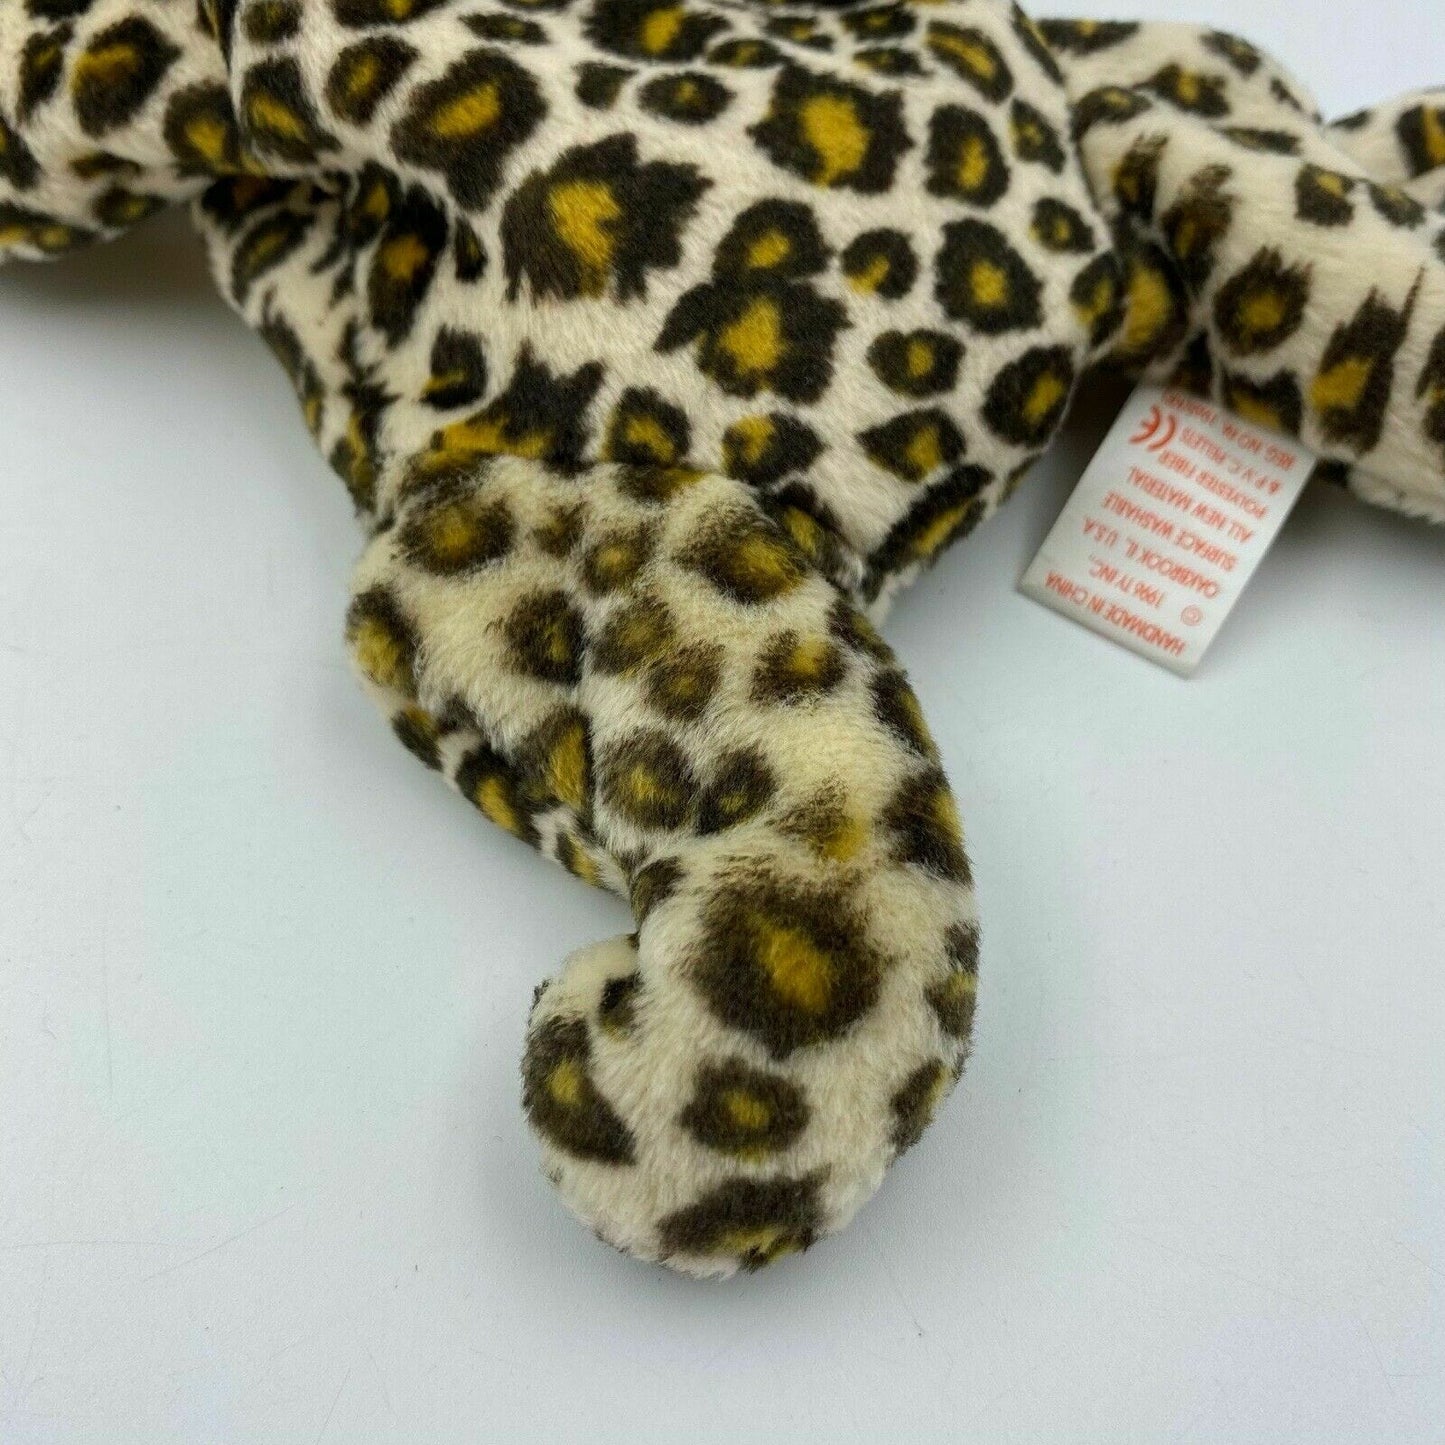 Nostalgic Ty Original Beanie Babies Freckles The Leopard Plush Toy 1996 Excellent Cond. Vintage